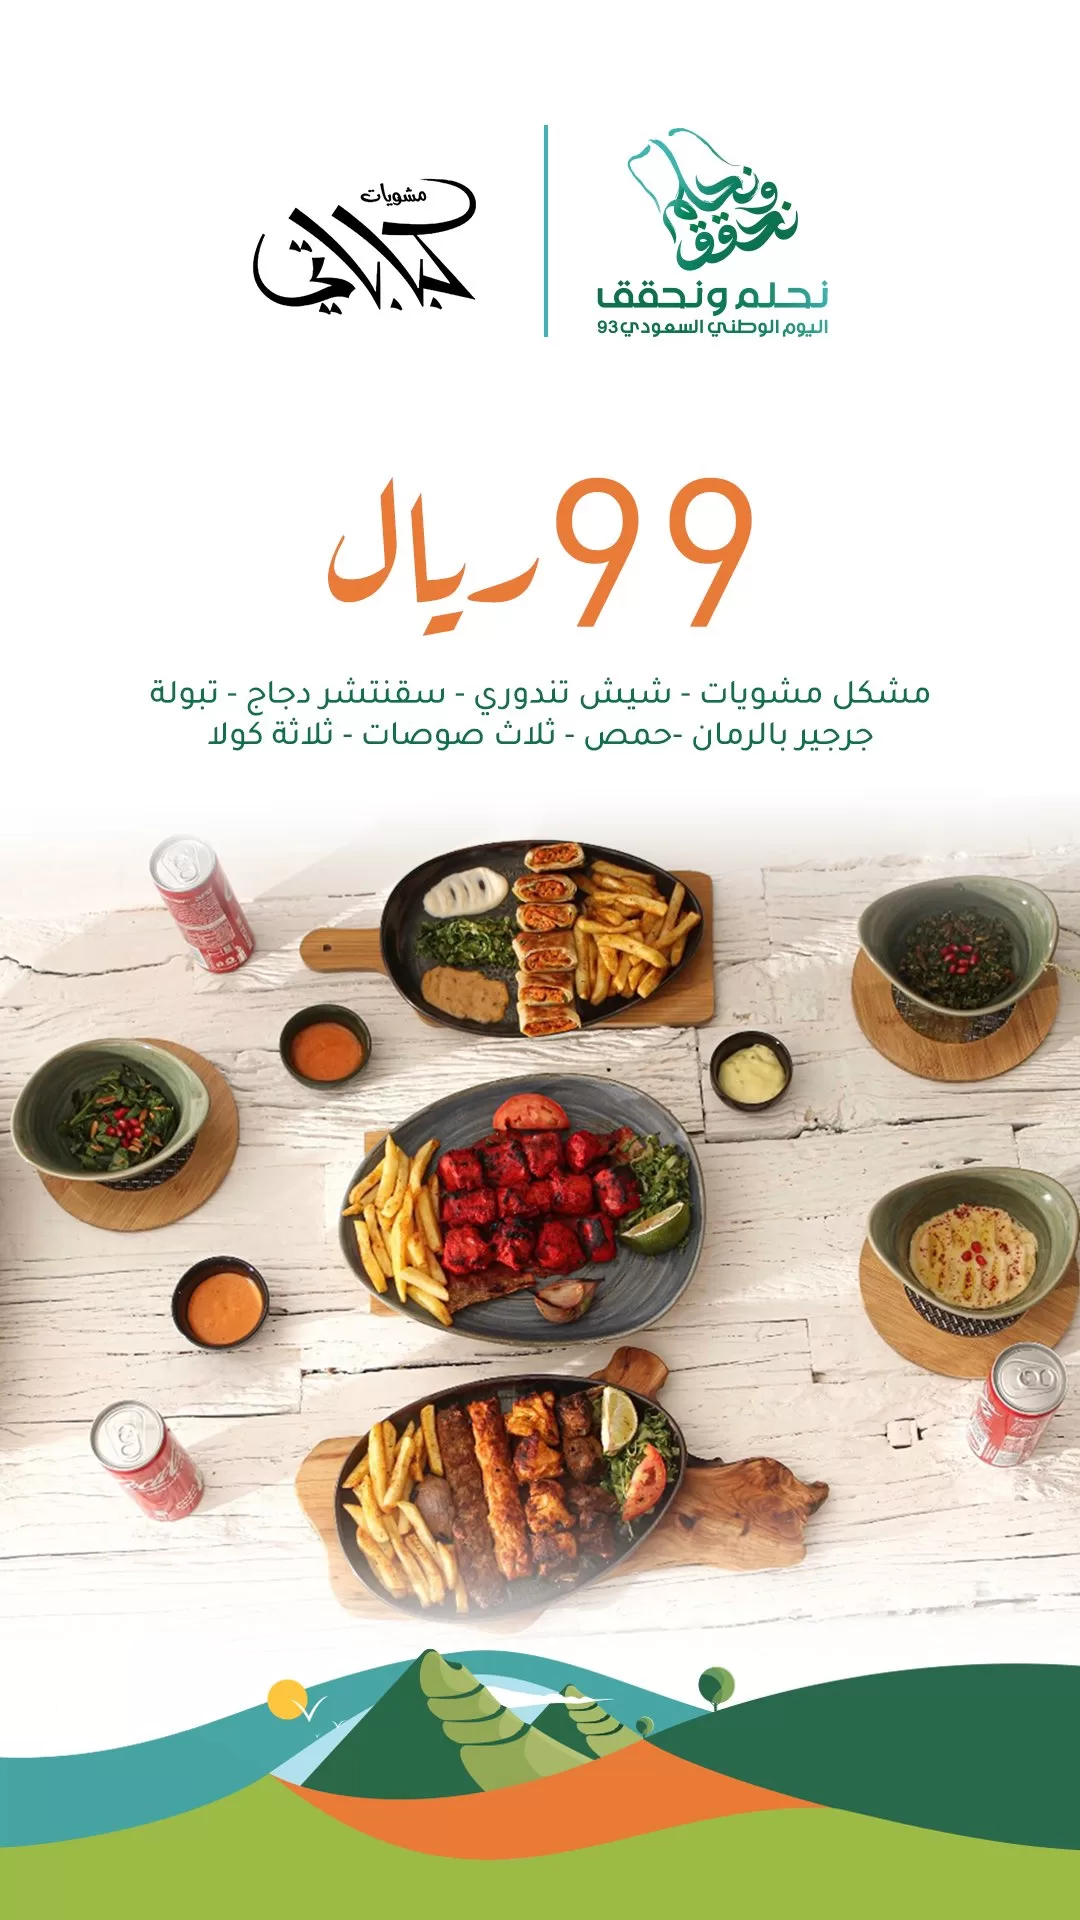 F6AaKcXW8AAGVbD jpg 1 - عروض مطاعم السعودية في اليوم الوطني السعودي 93 بصفحة واحدة (محدثة يوميا )